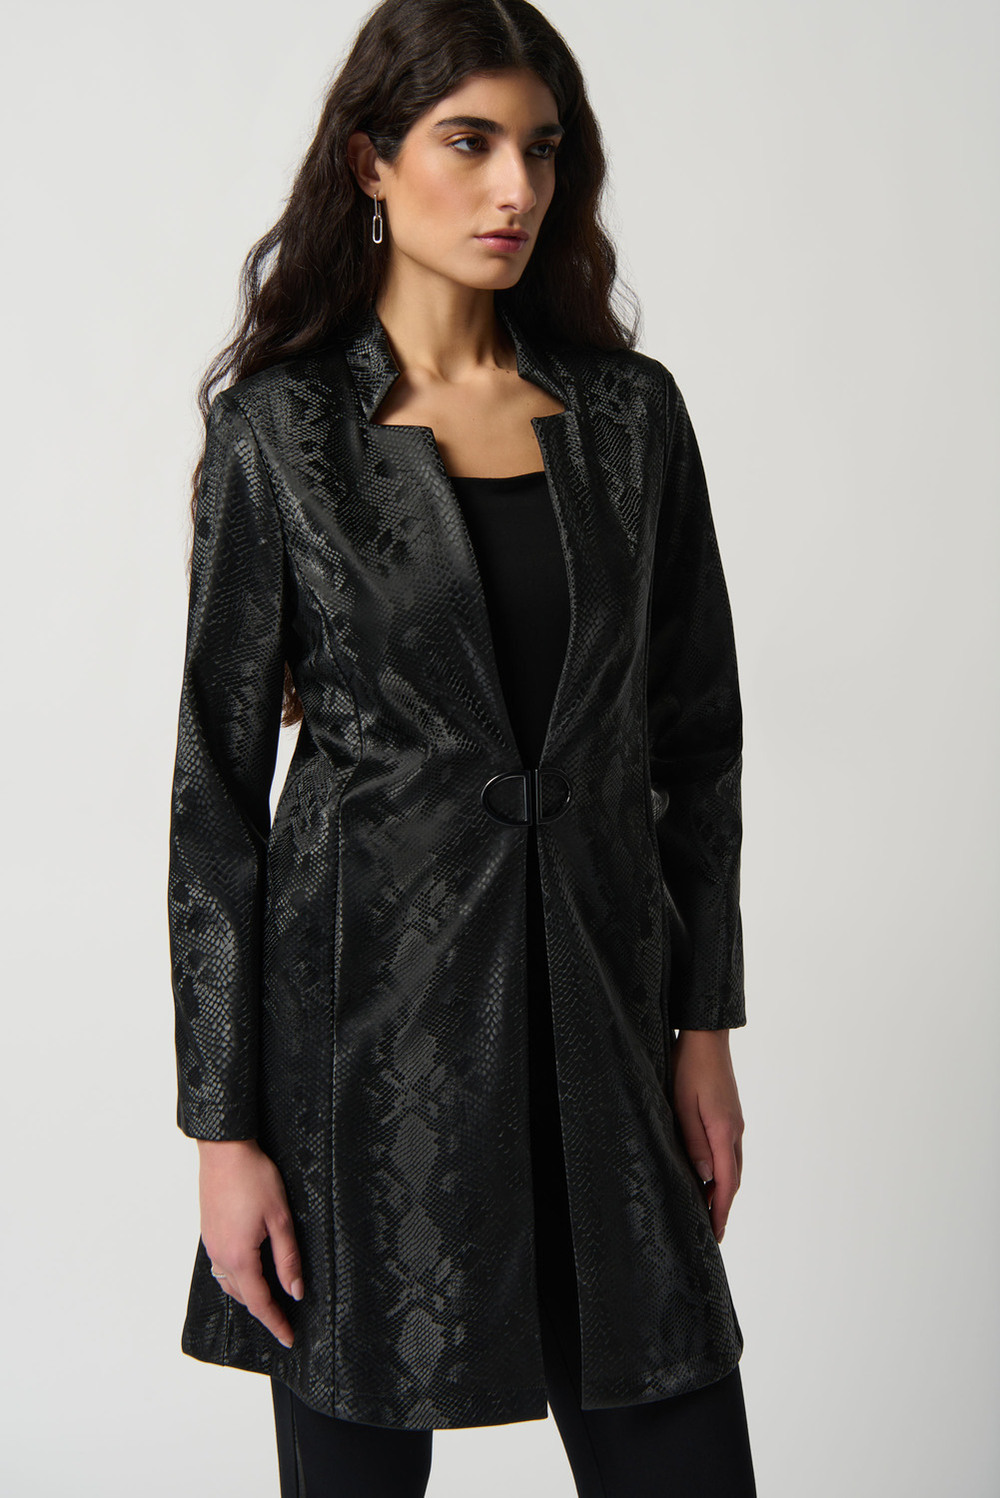 Snakeskin Button-Up Coat Style 234111. Black